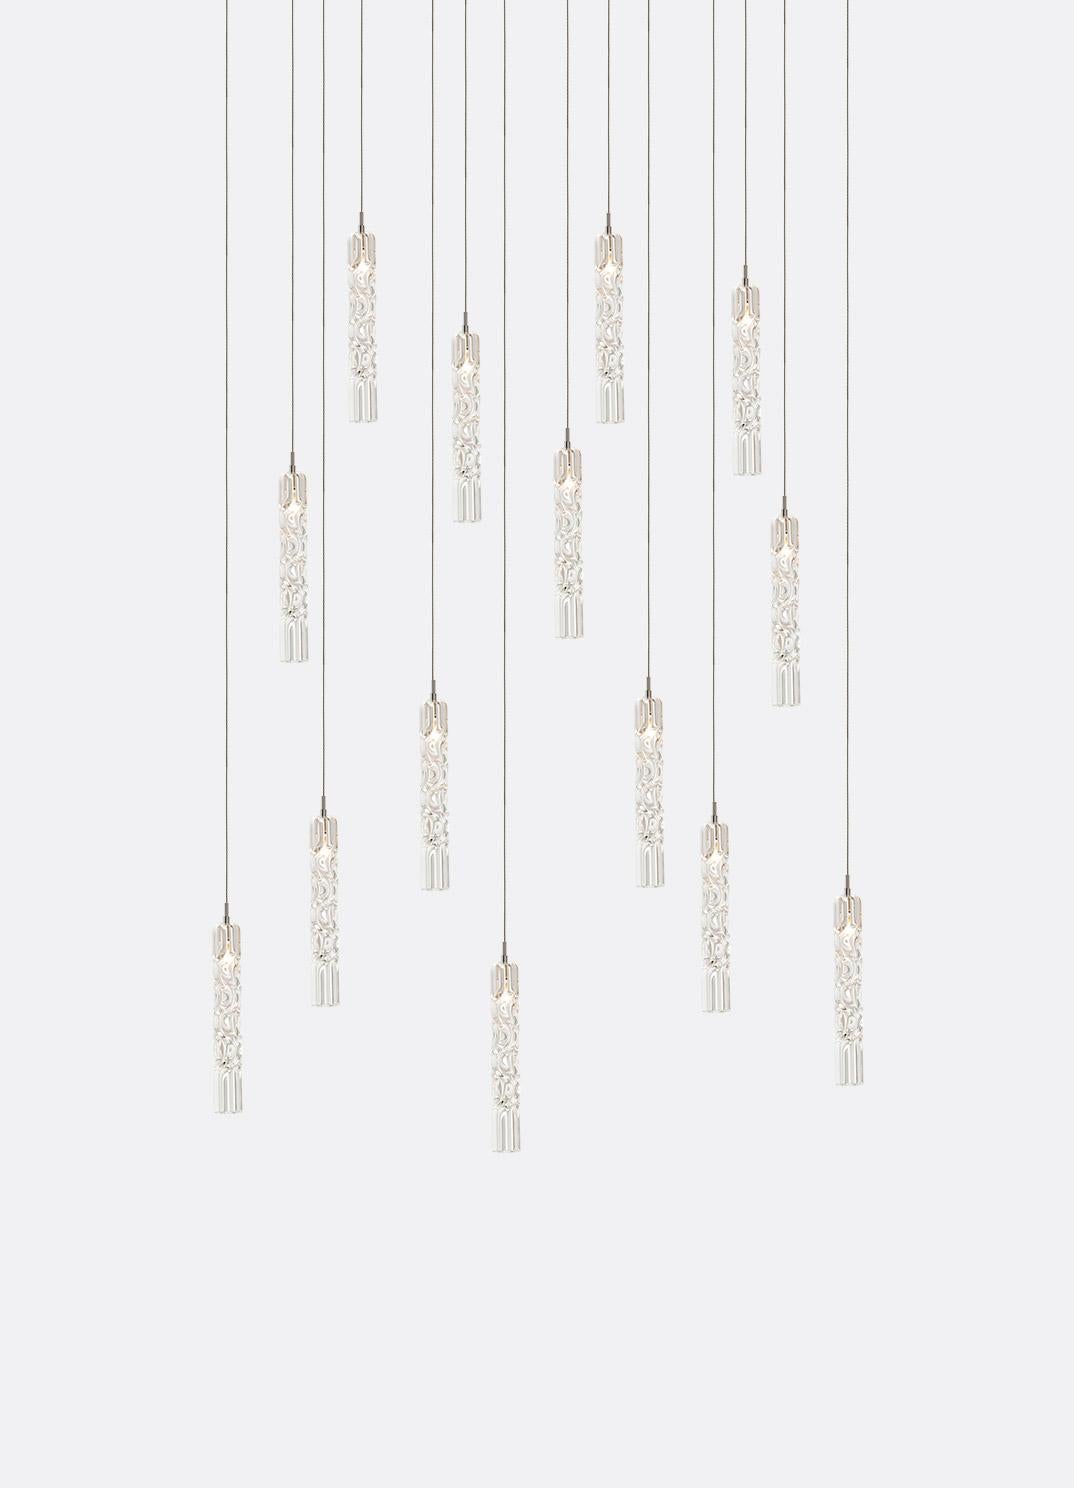 Hand blown glass pendants fixtures. 14 glass pendants on 18